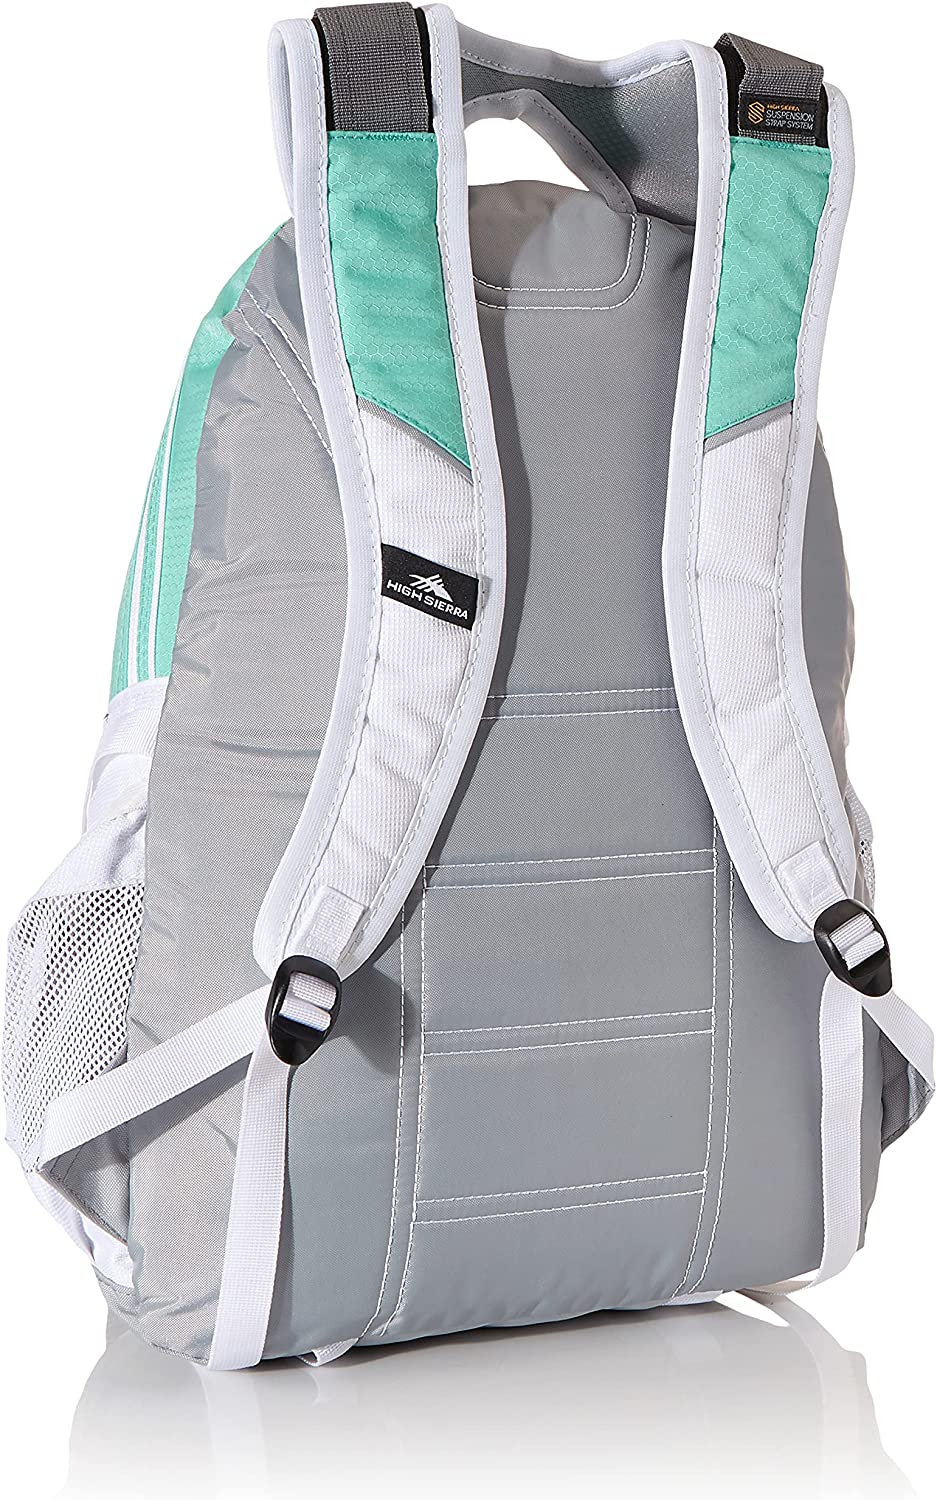 High Sierra Loop-Backpack, School, Travel, or Work Bookbag with tablet-sleeve, Aquamarine/White/Ash, One Size - image 4 of 6